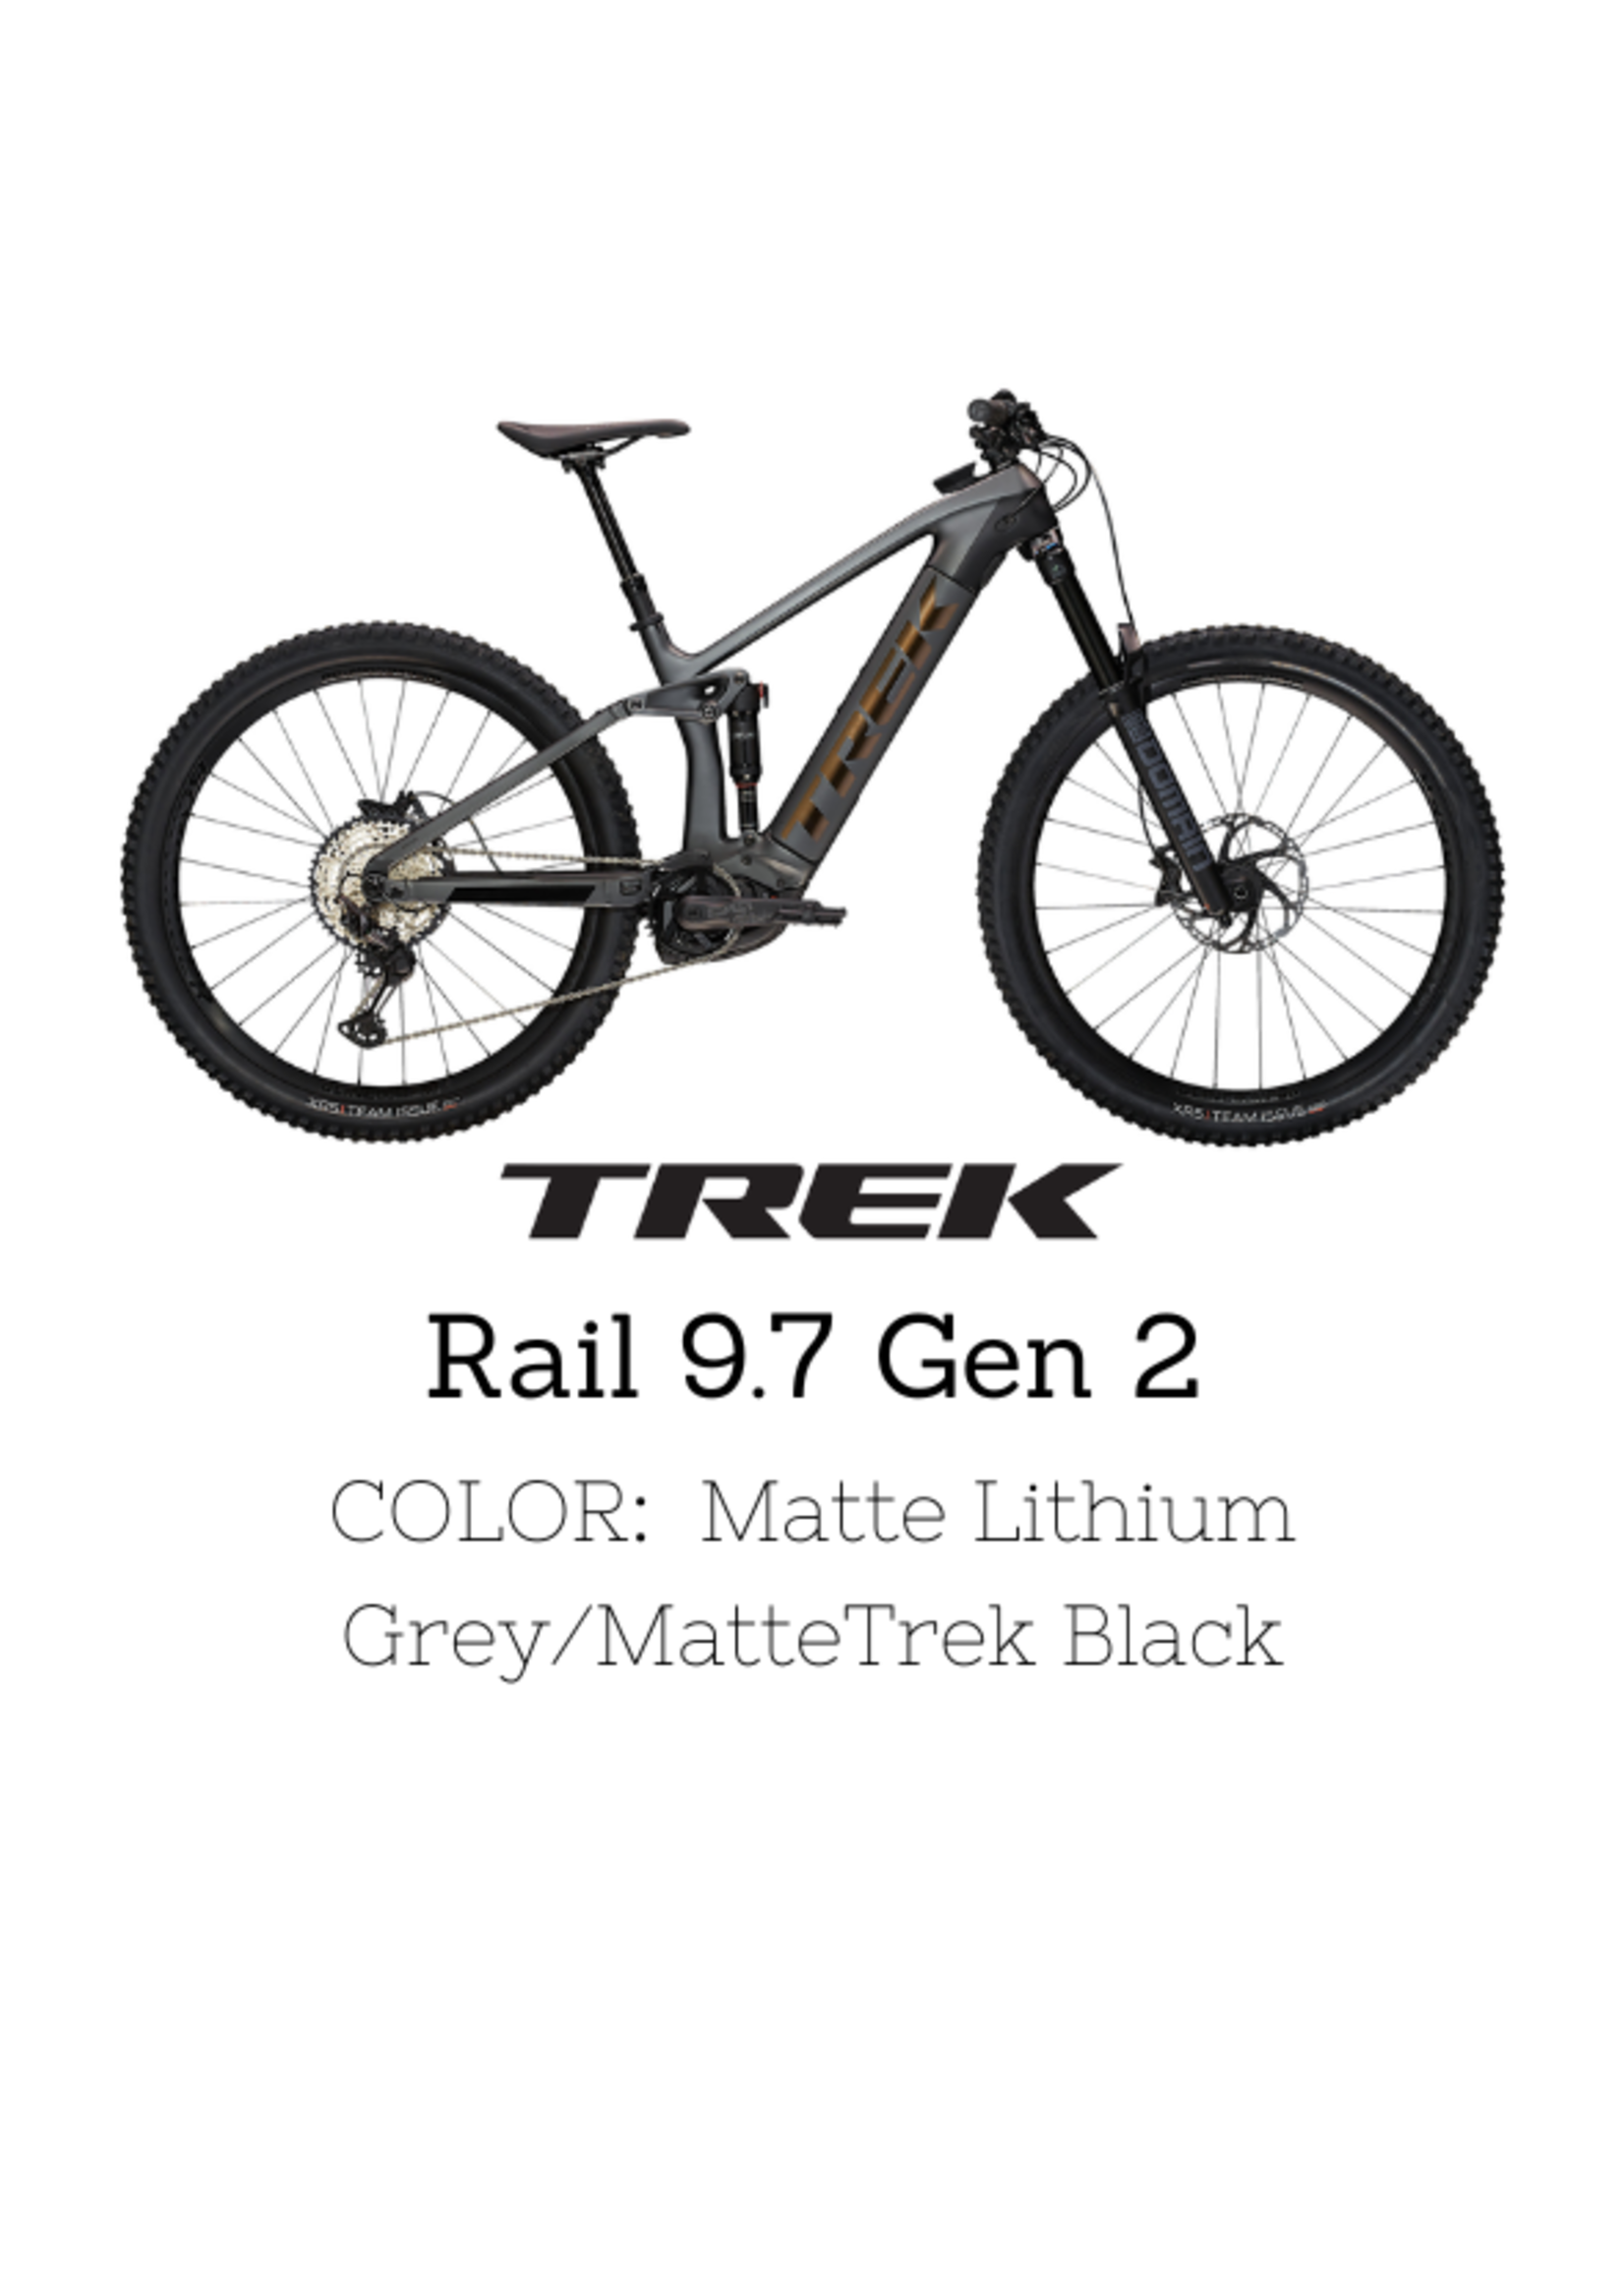 TREK Trek Rail 9.7 Gen 2